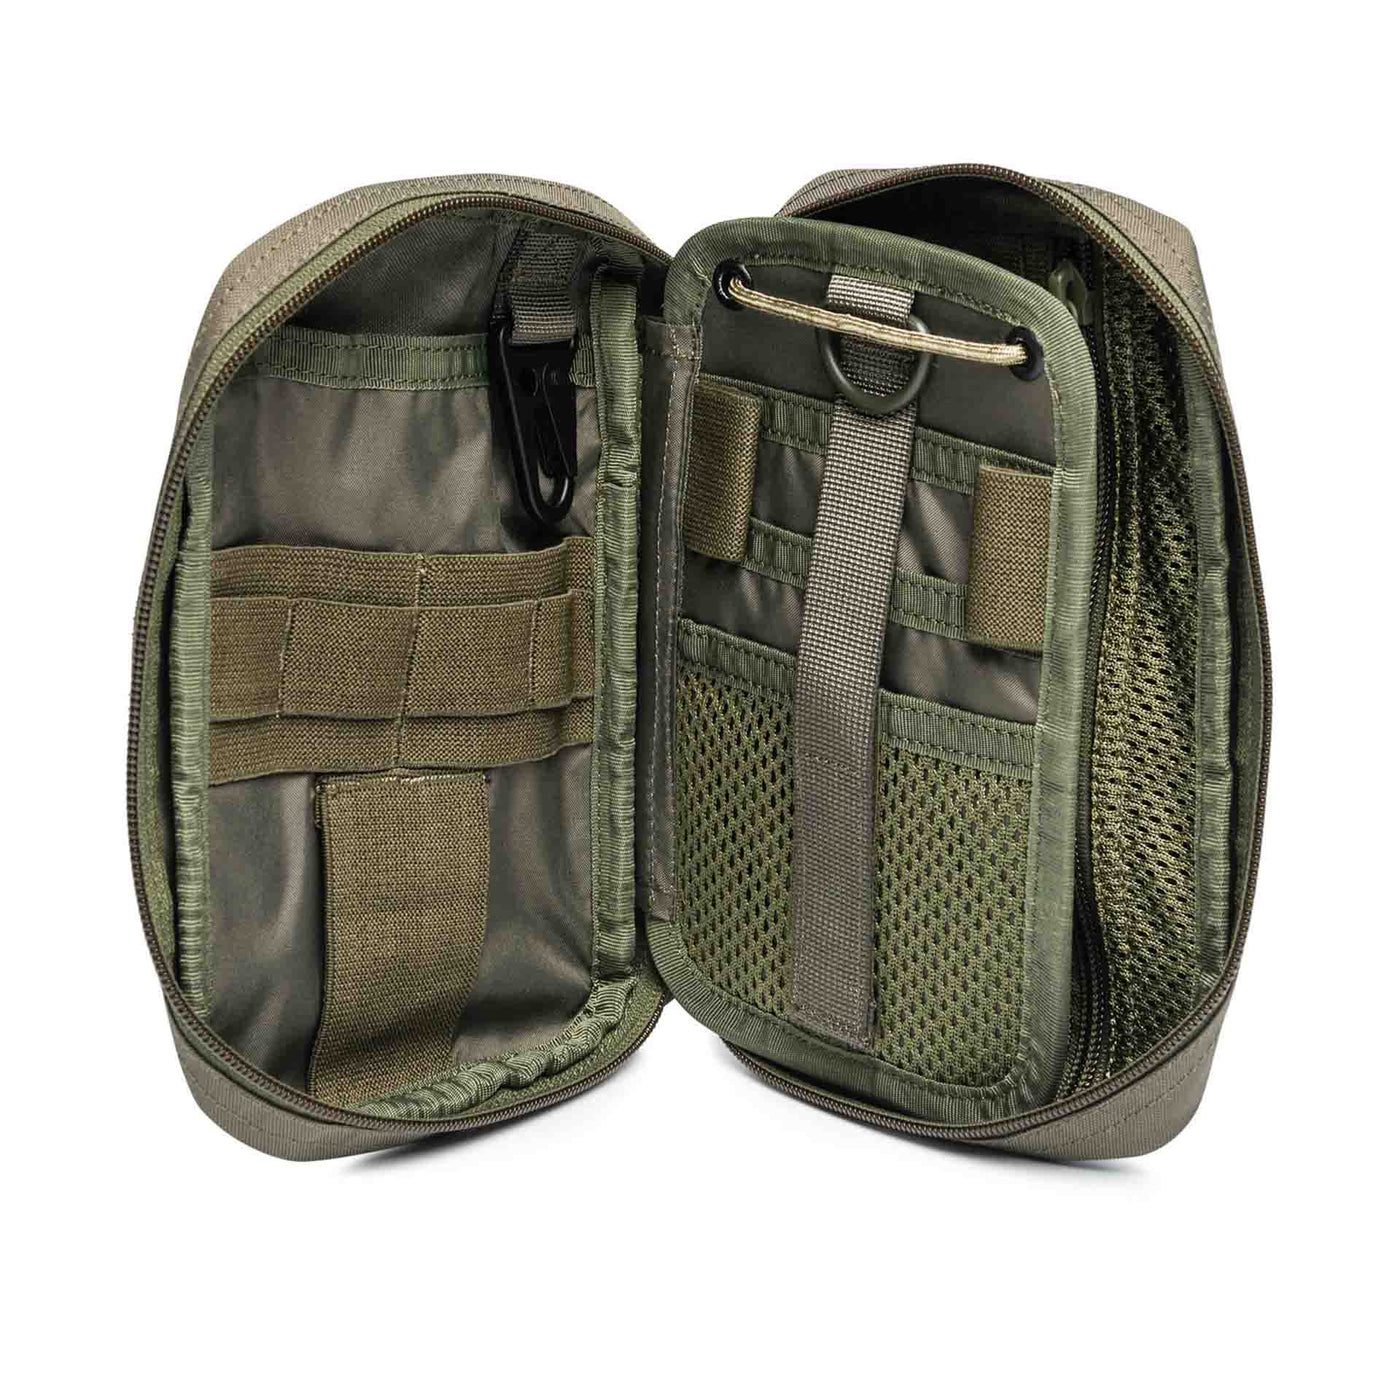 Beretta everyday carry pouch closeup